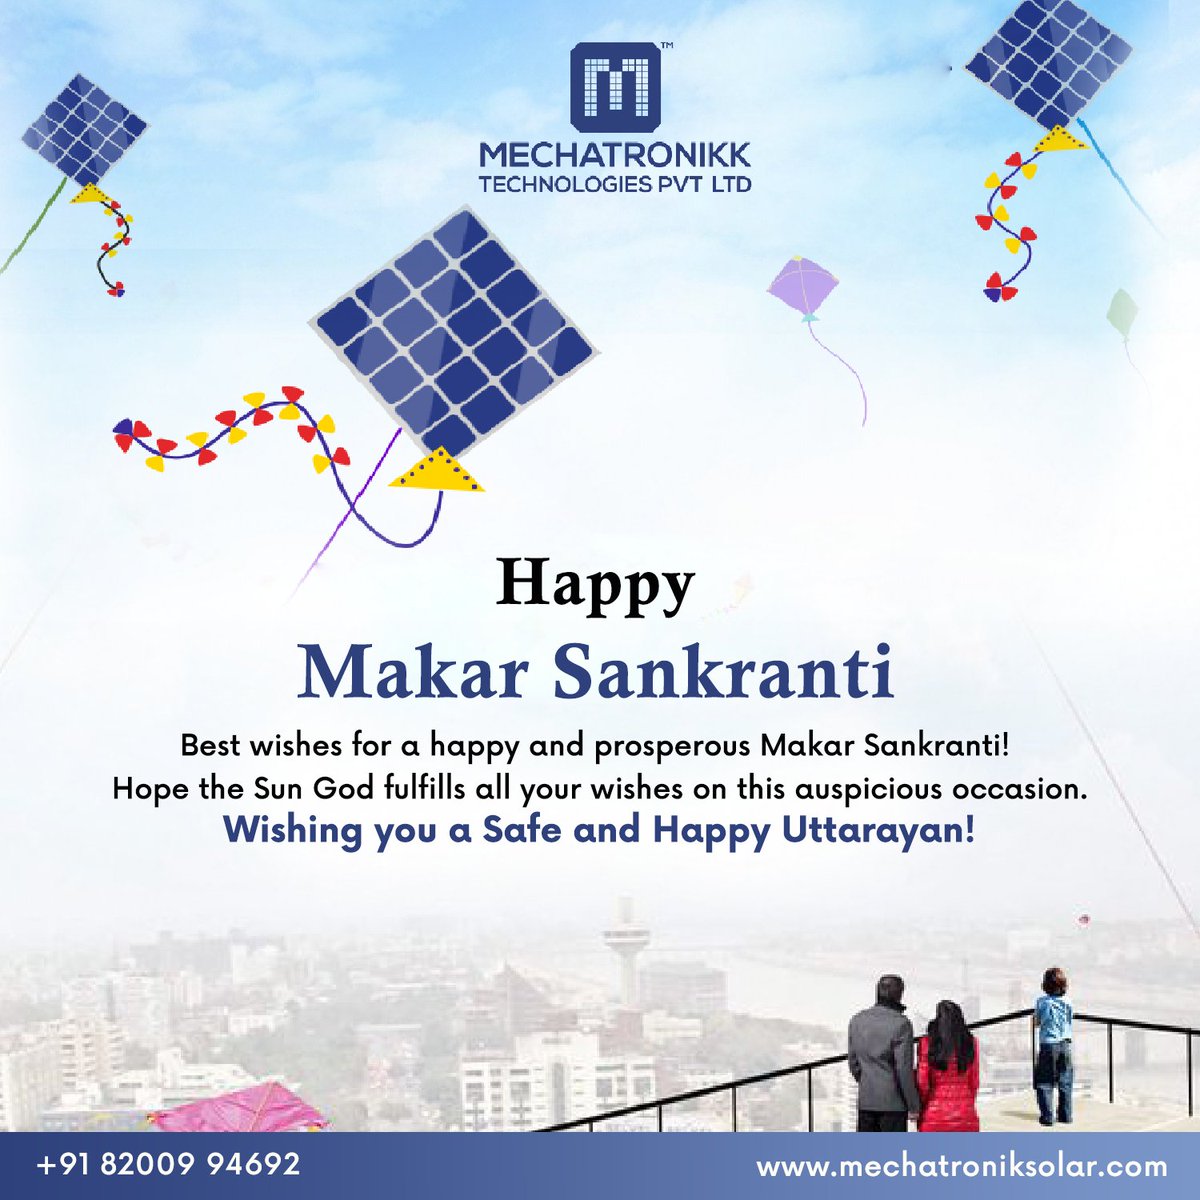 Best wishes for a happy and prosperous Makar Sankranti! the Sun God fulfills all your wishes on this auspicious occasion.
Hope Wishing you a Safe and Happy Uttarayan
.
.
#Makarsankranti #Kitefestival #Happyuttarayan #BestSolarCompany #SolarPanels #mechatroniksolar #Ahmedabad